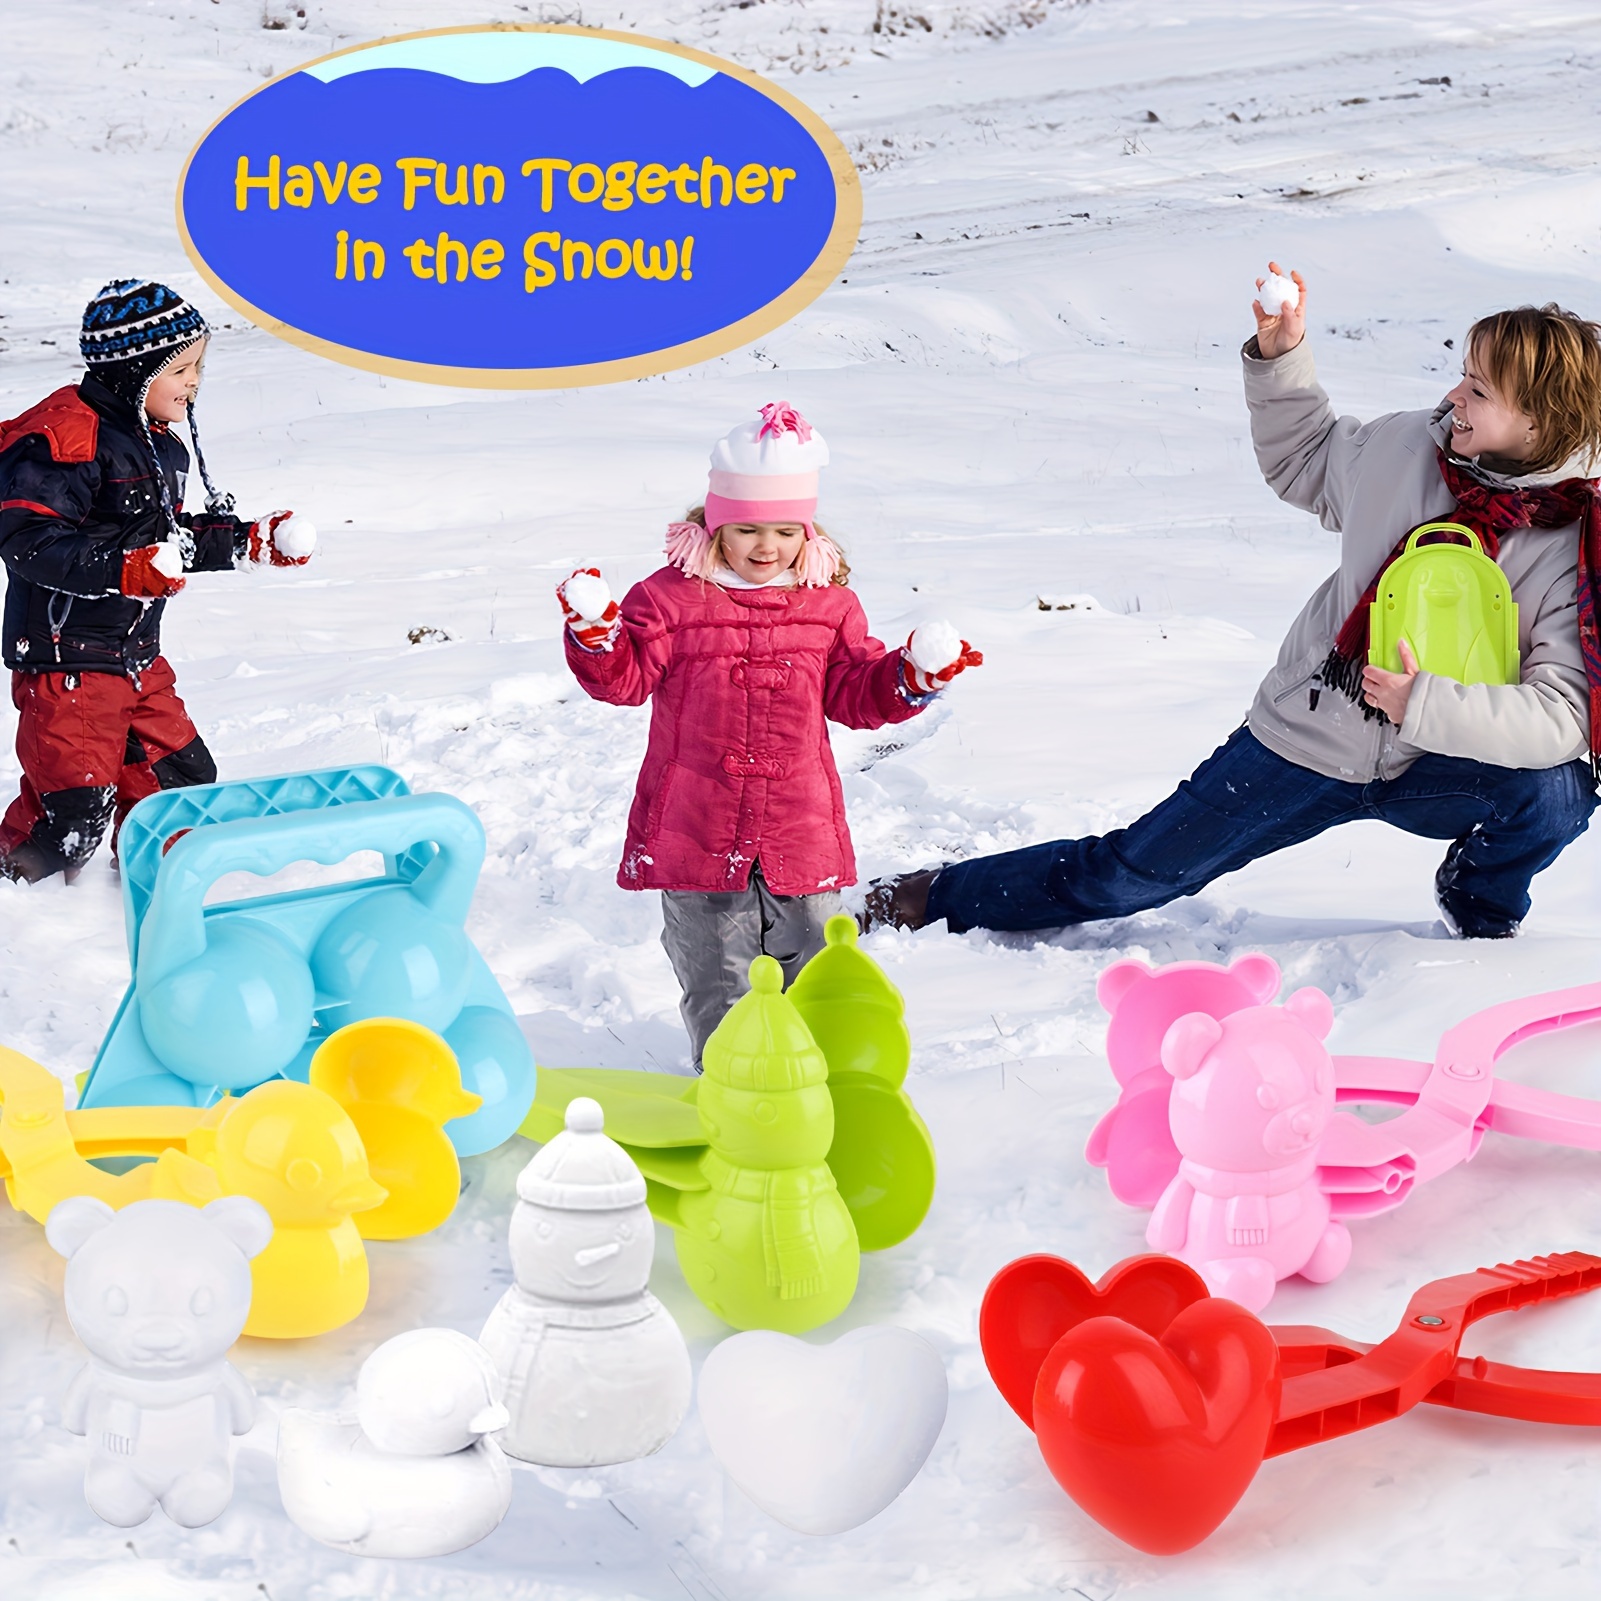 Children Outdoor Toys, Snow Ball Maker Tool, Winter Toys Outdoor